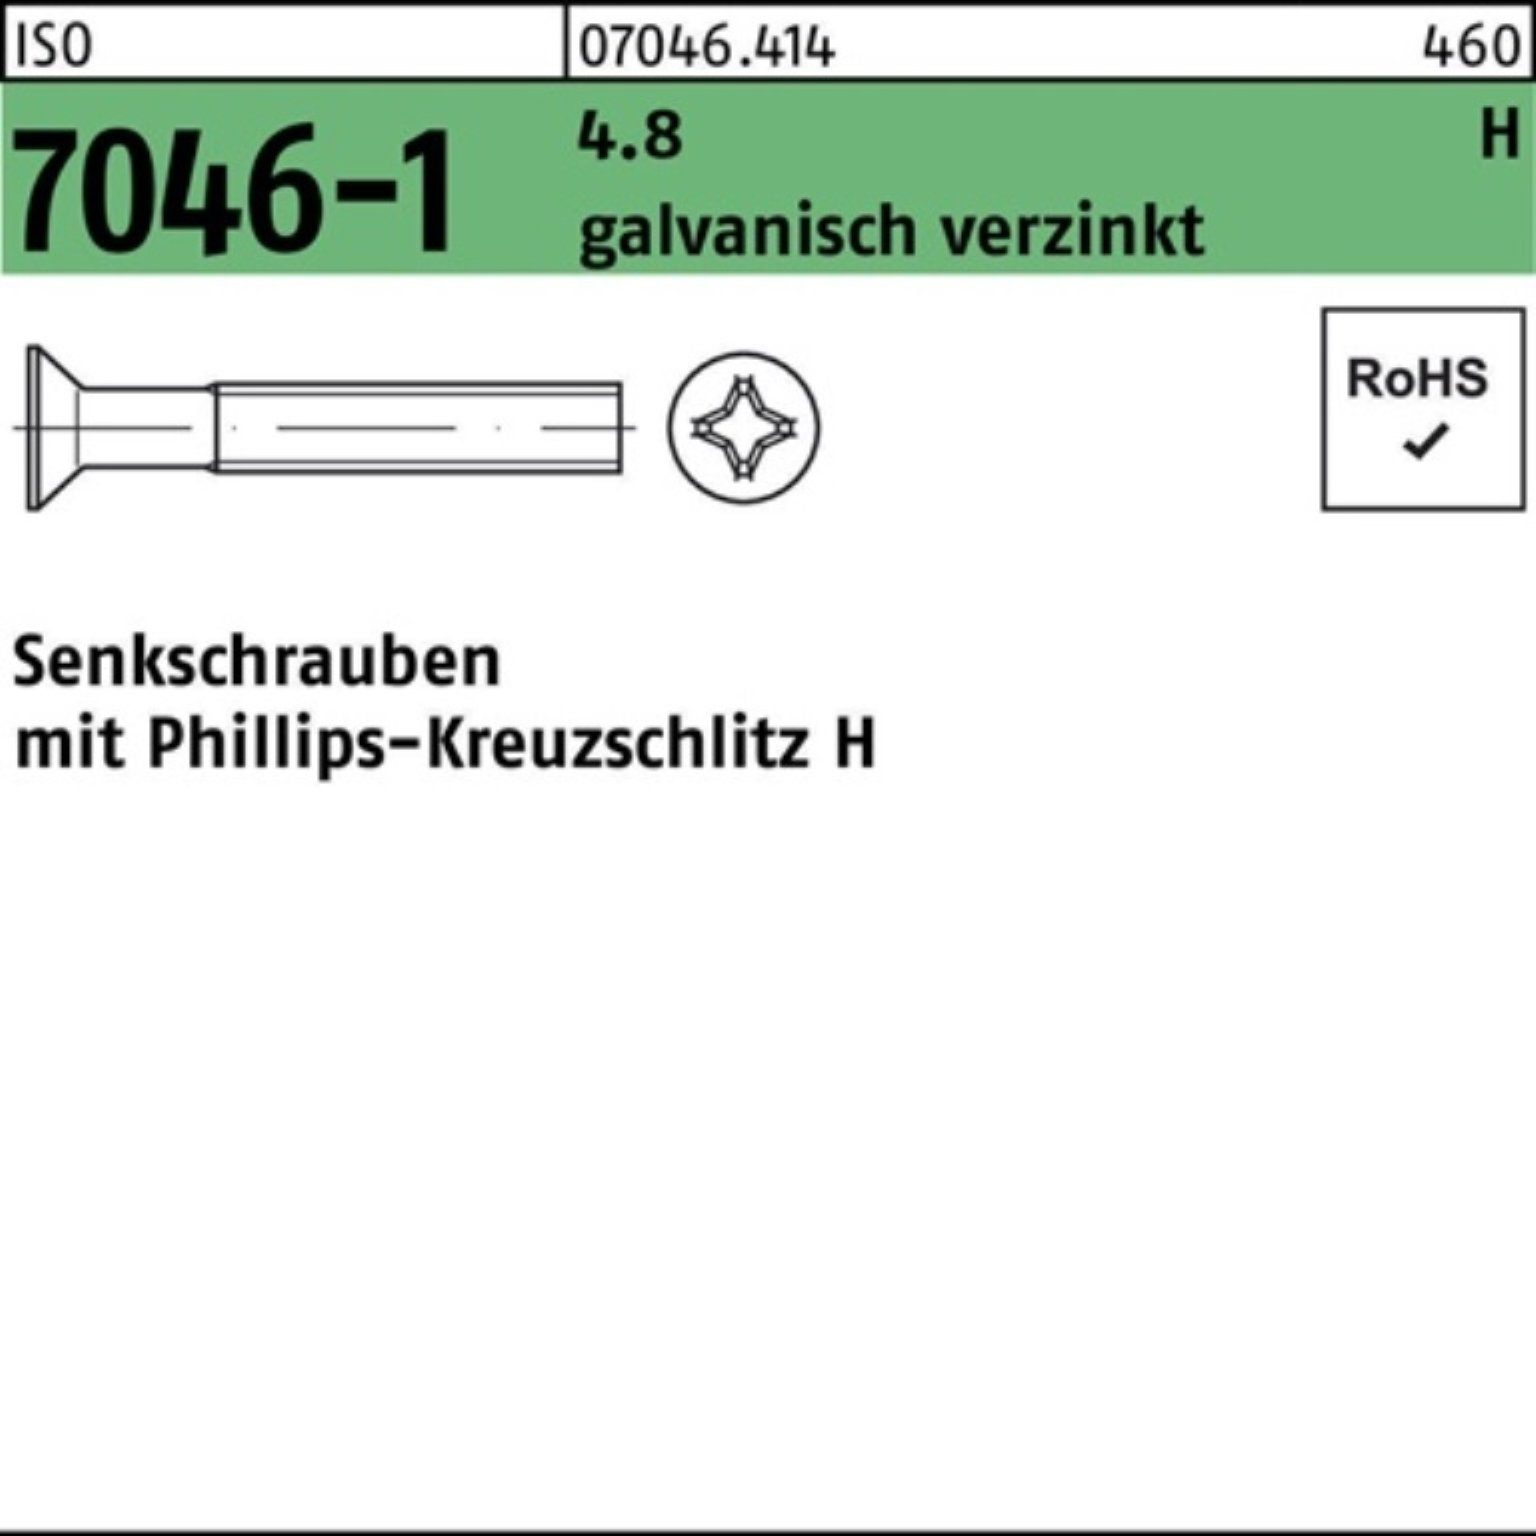 Reyher Senkschraube 100er Pack IS 7046-1 Senkschraube 4.8 galv.verz. 100St. ISO PH M8x45-H